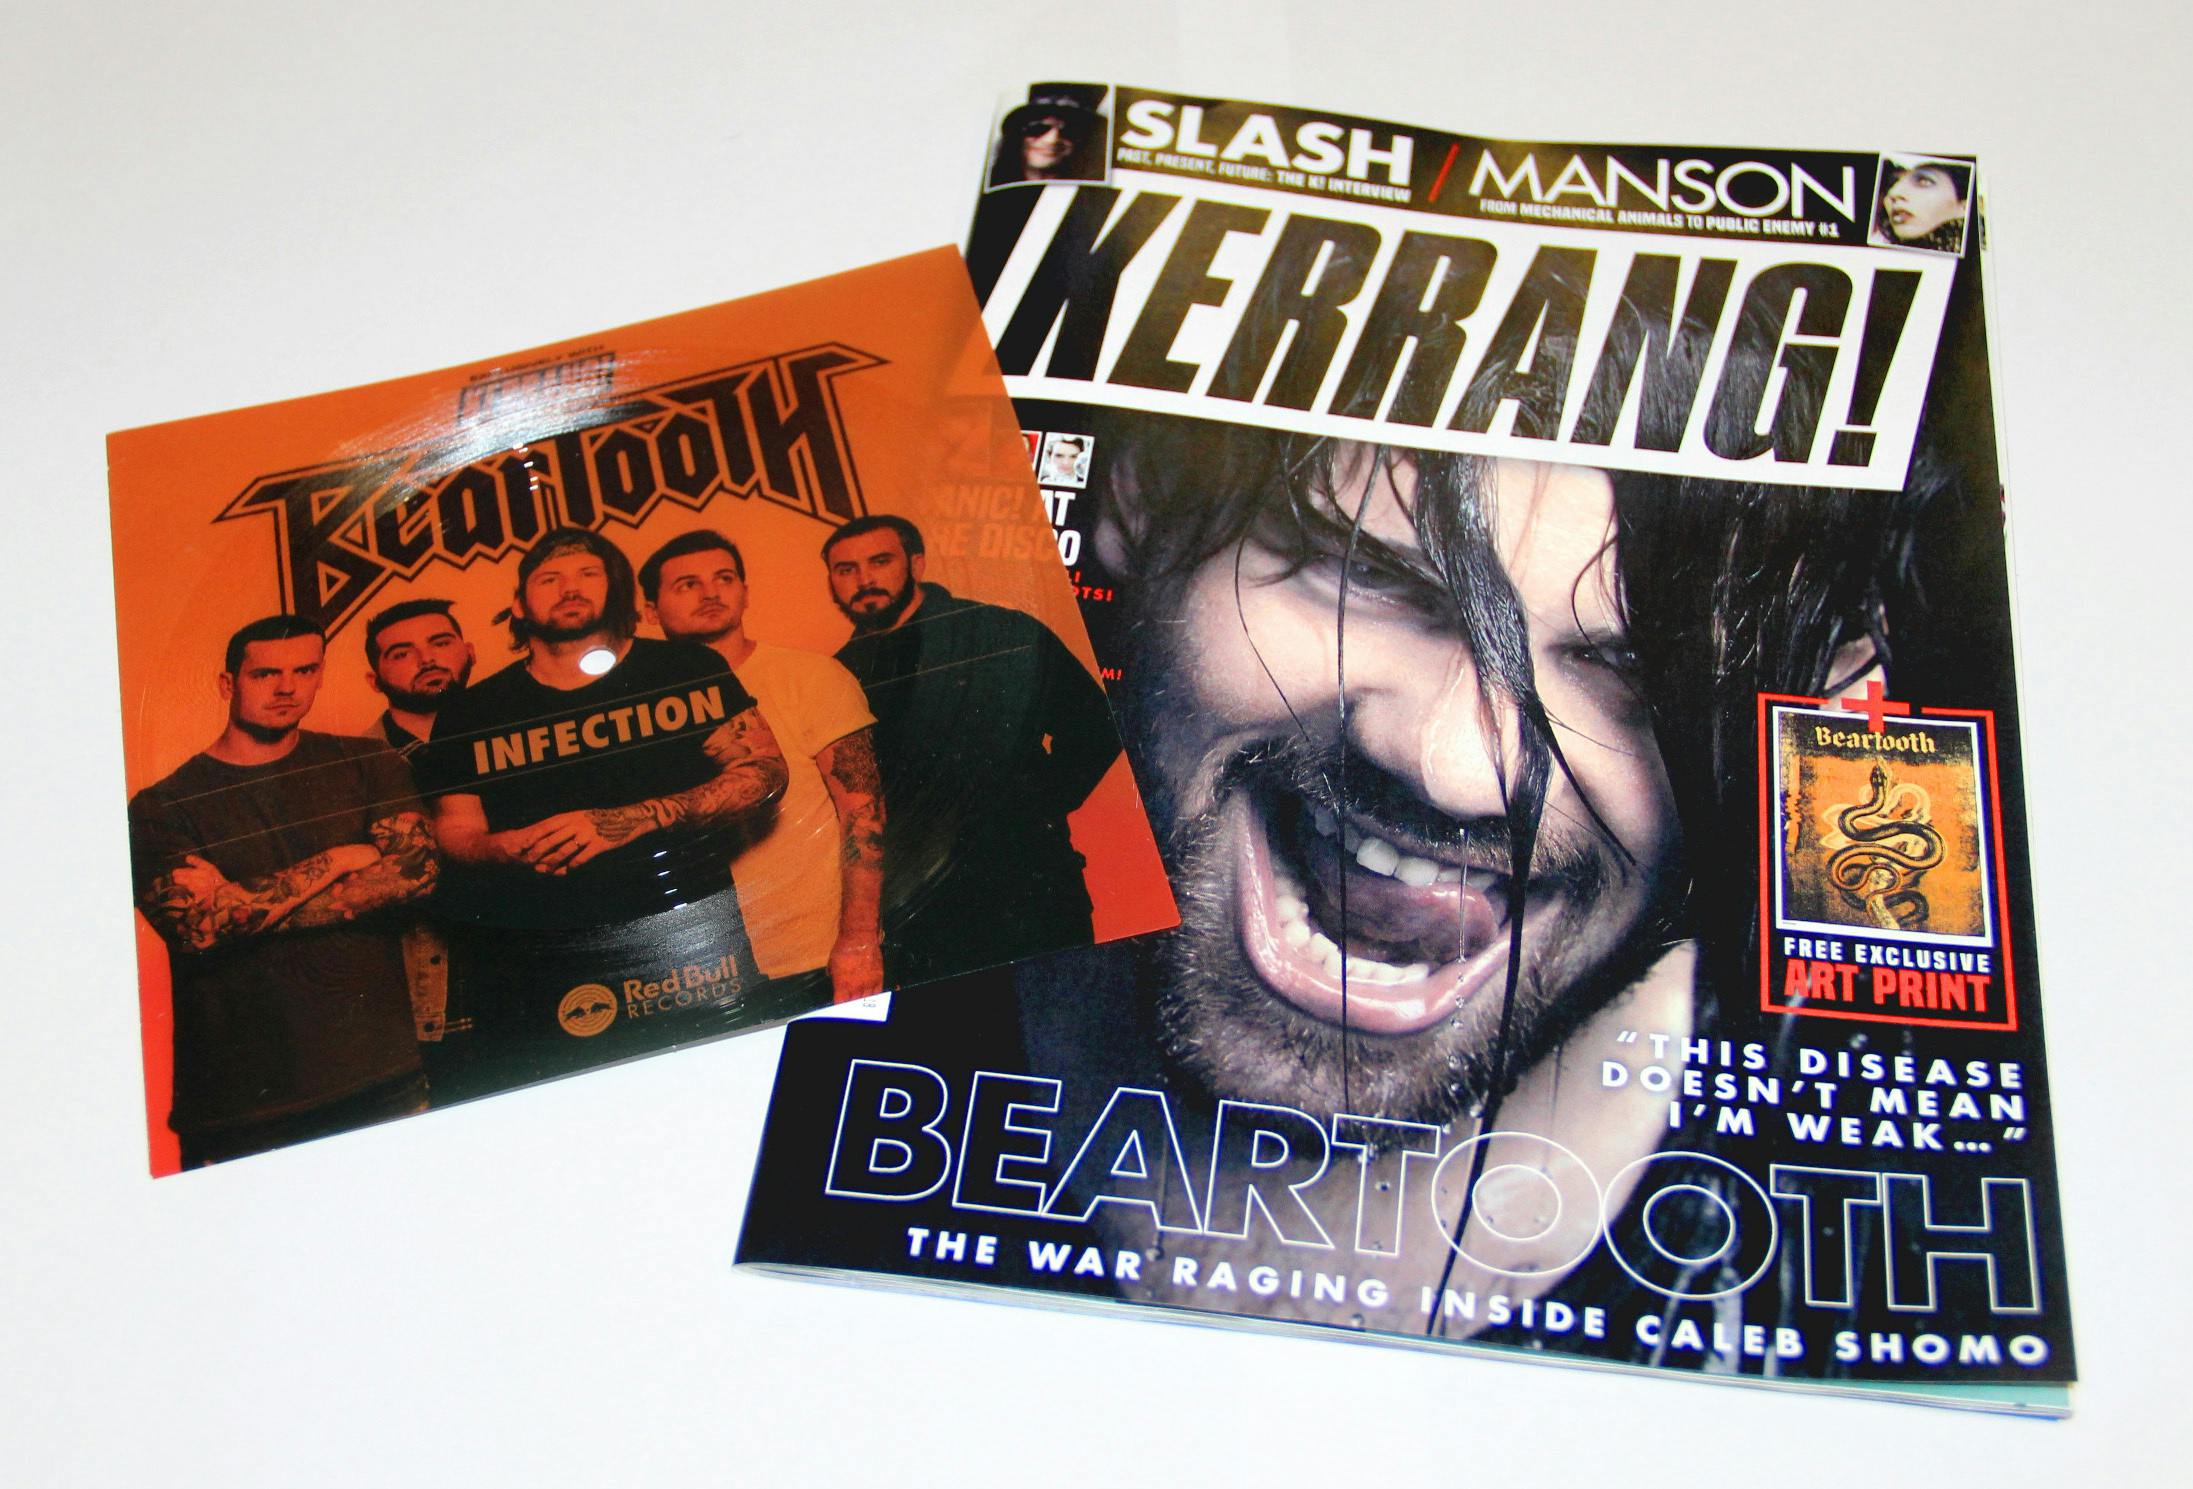 Beartooth To Release Exclusive 7-Inch Vinyl Picture Flexi-Disc Through Kerrang!